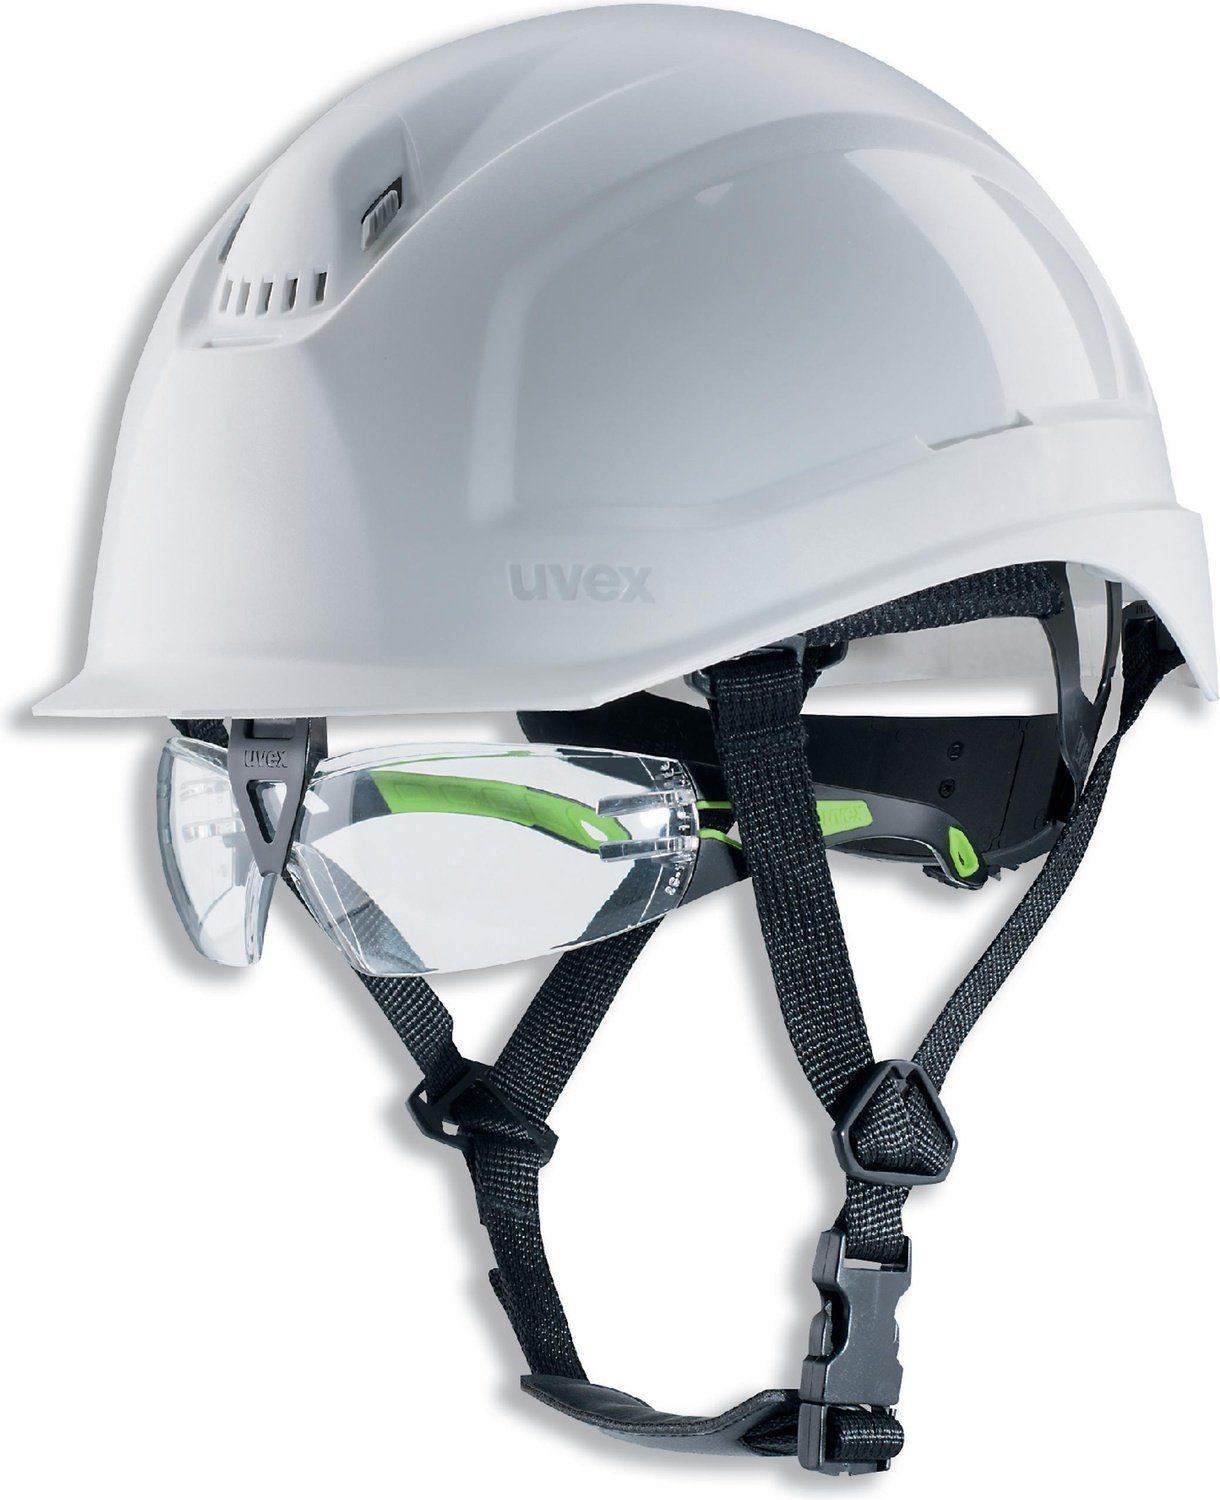 Uvex Kopfschutz | Kopfschutz